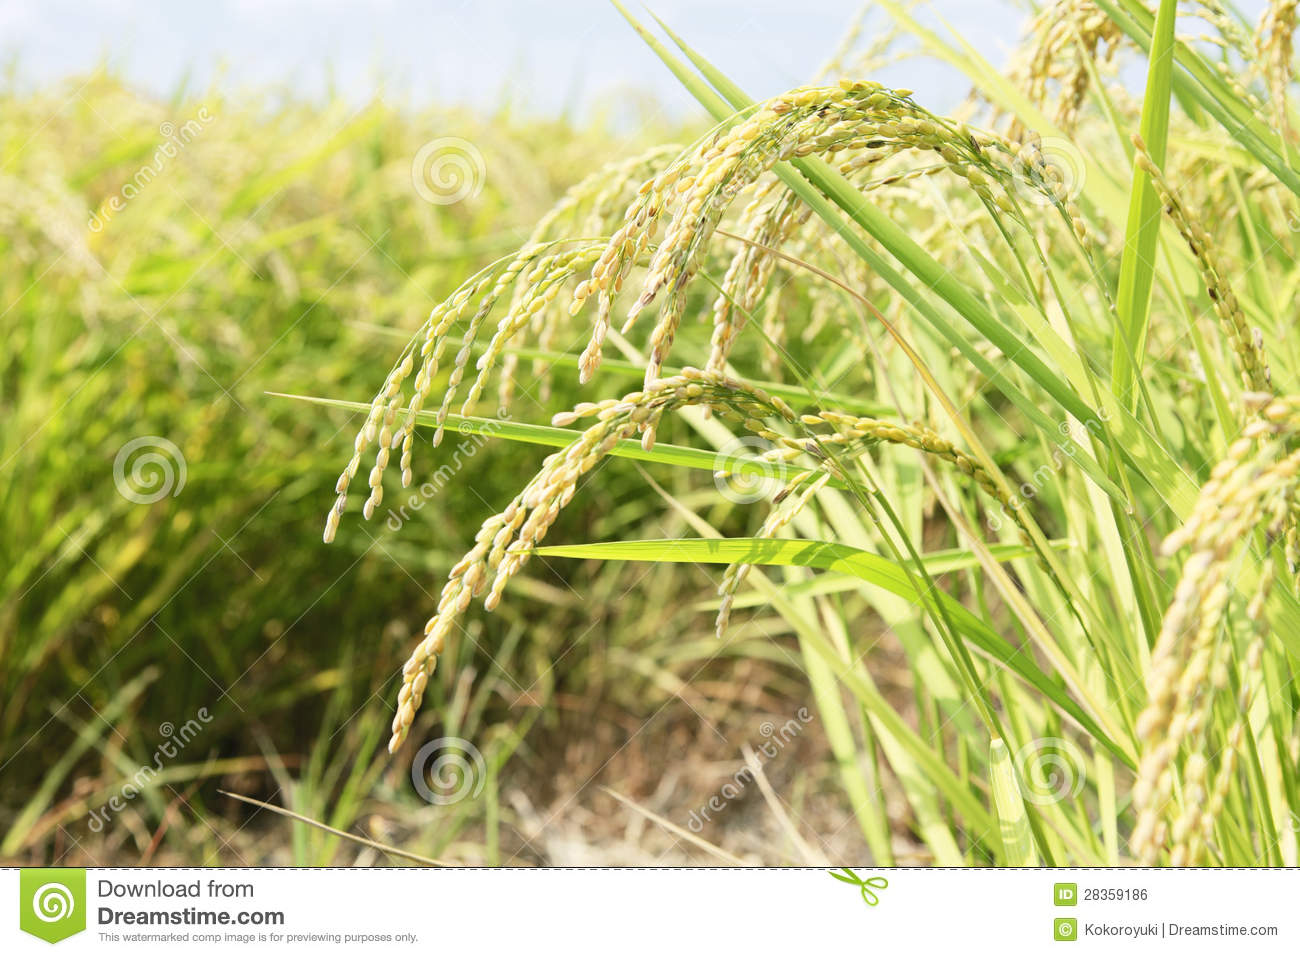 Rice Plant Royalty Free Stock Image   Image  28359186